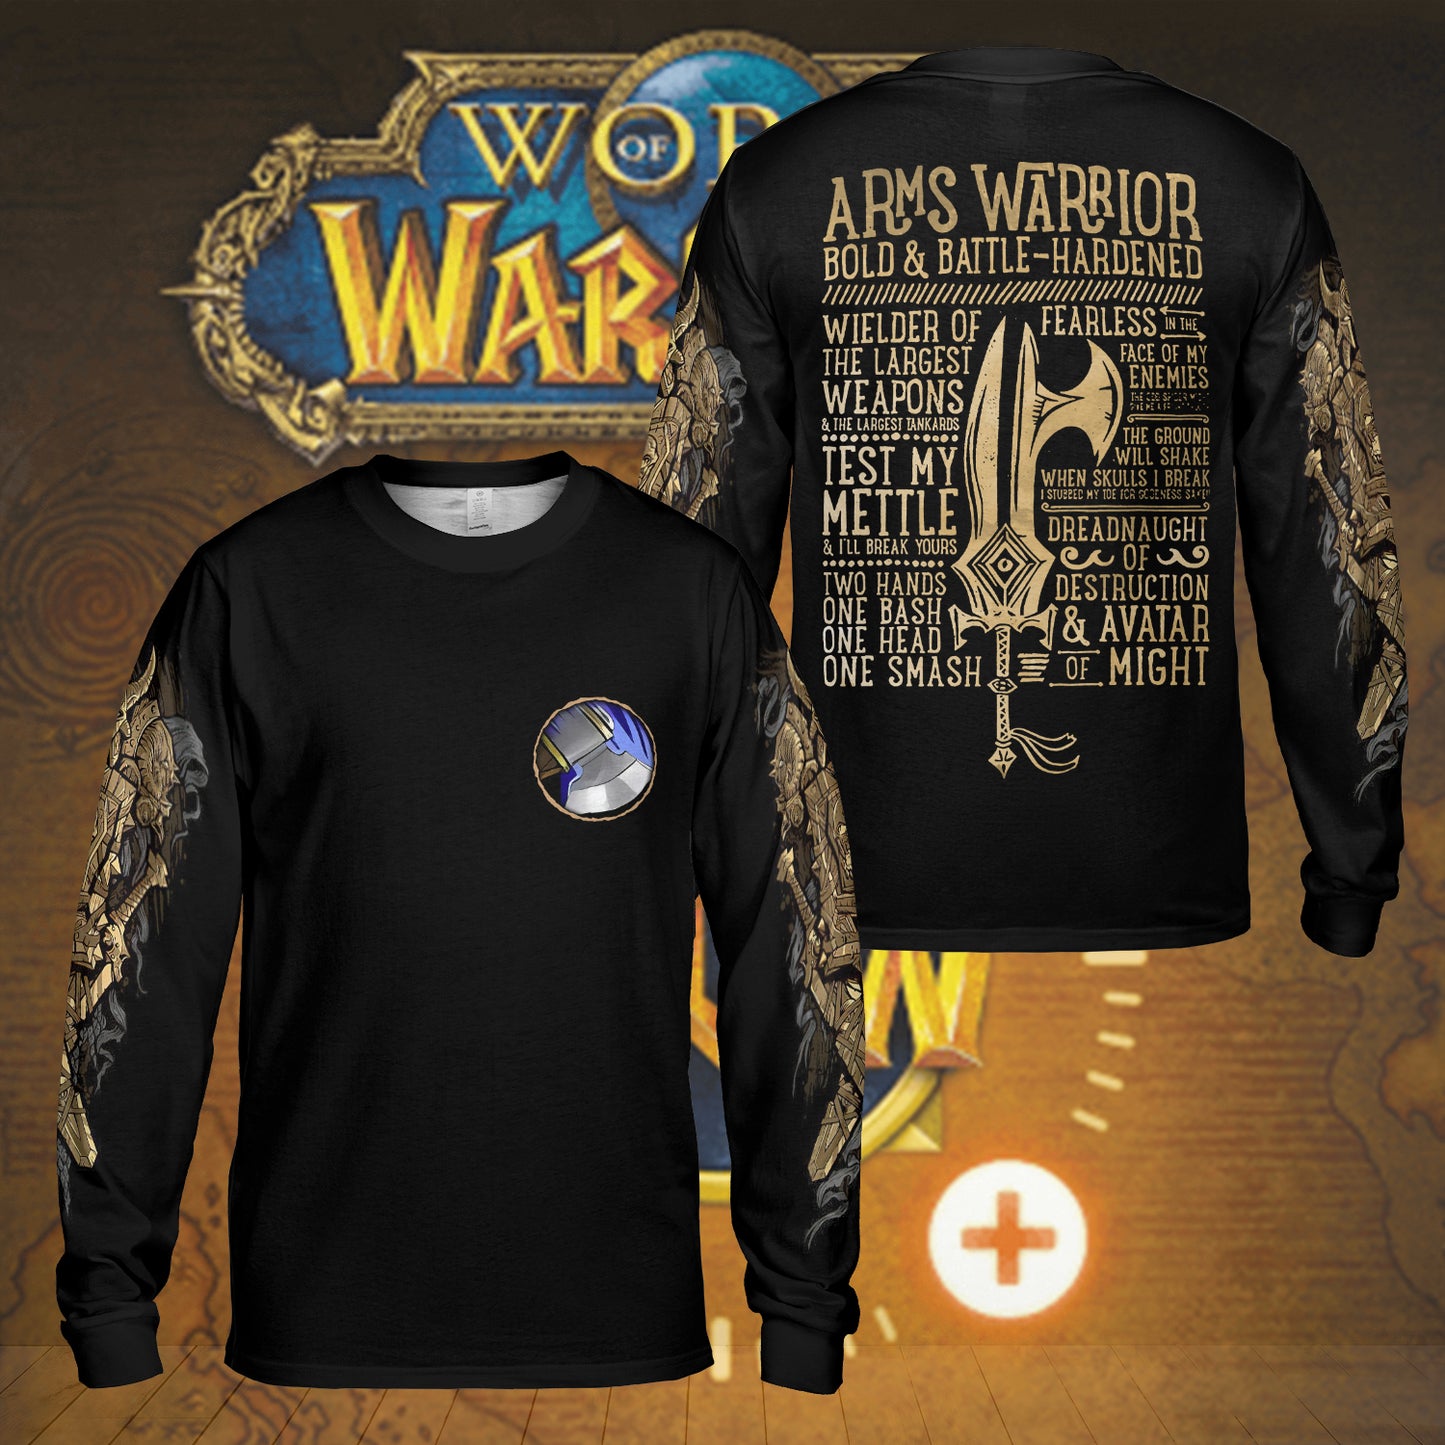 Arms Warrior - Wow Class Guide V3 - AOP Long Sleeve Shirt